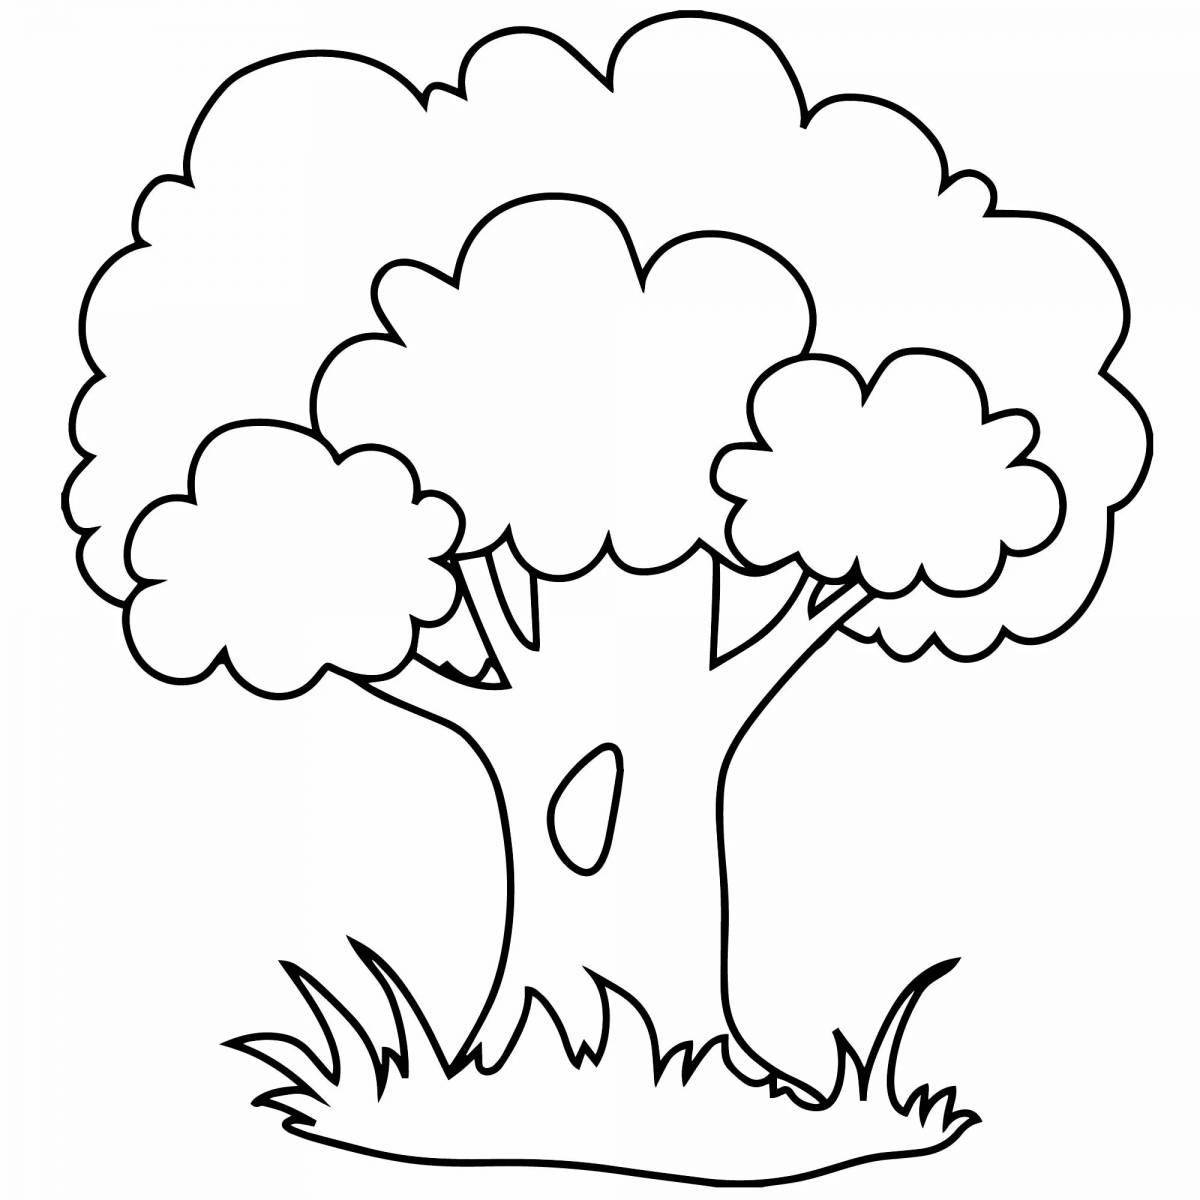 Fun tree coloring for kids